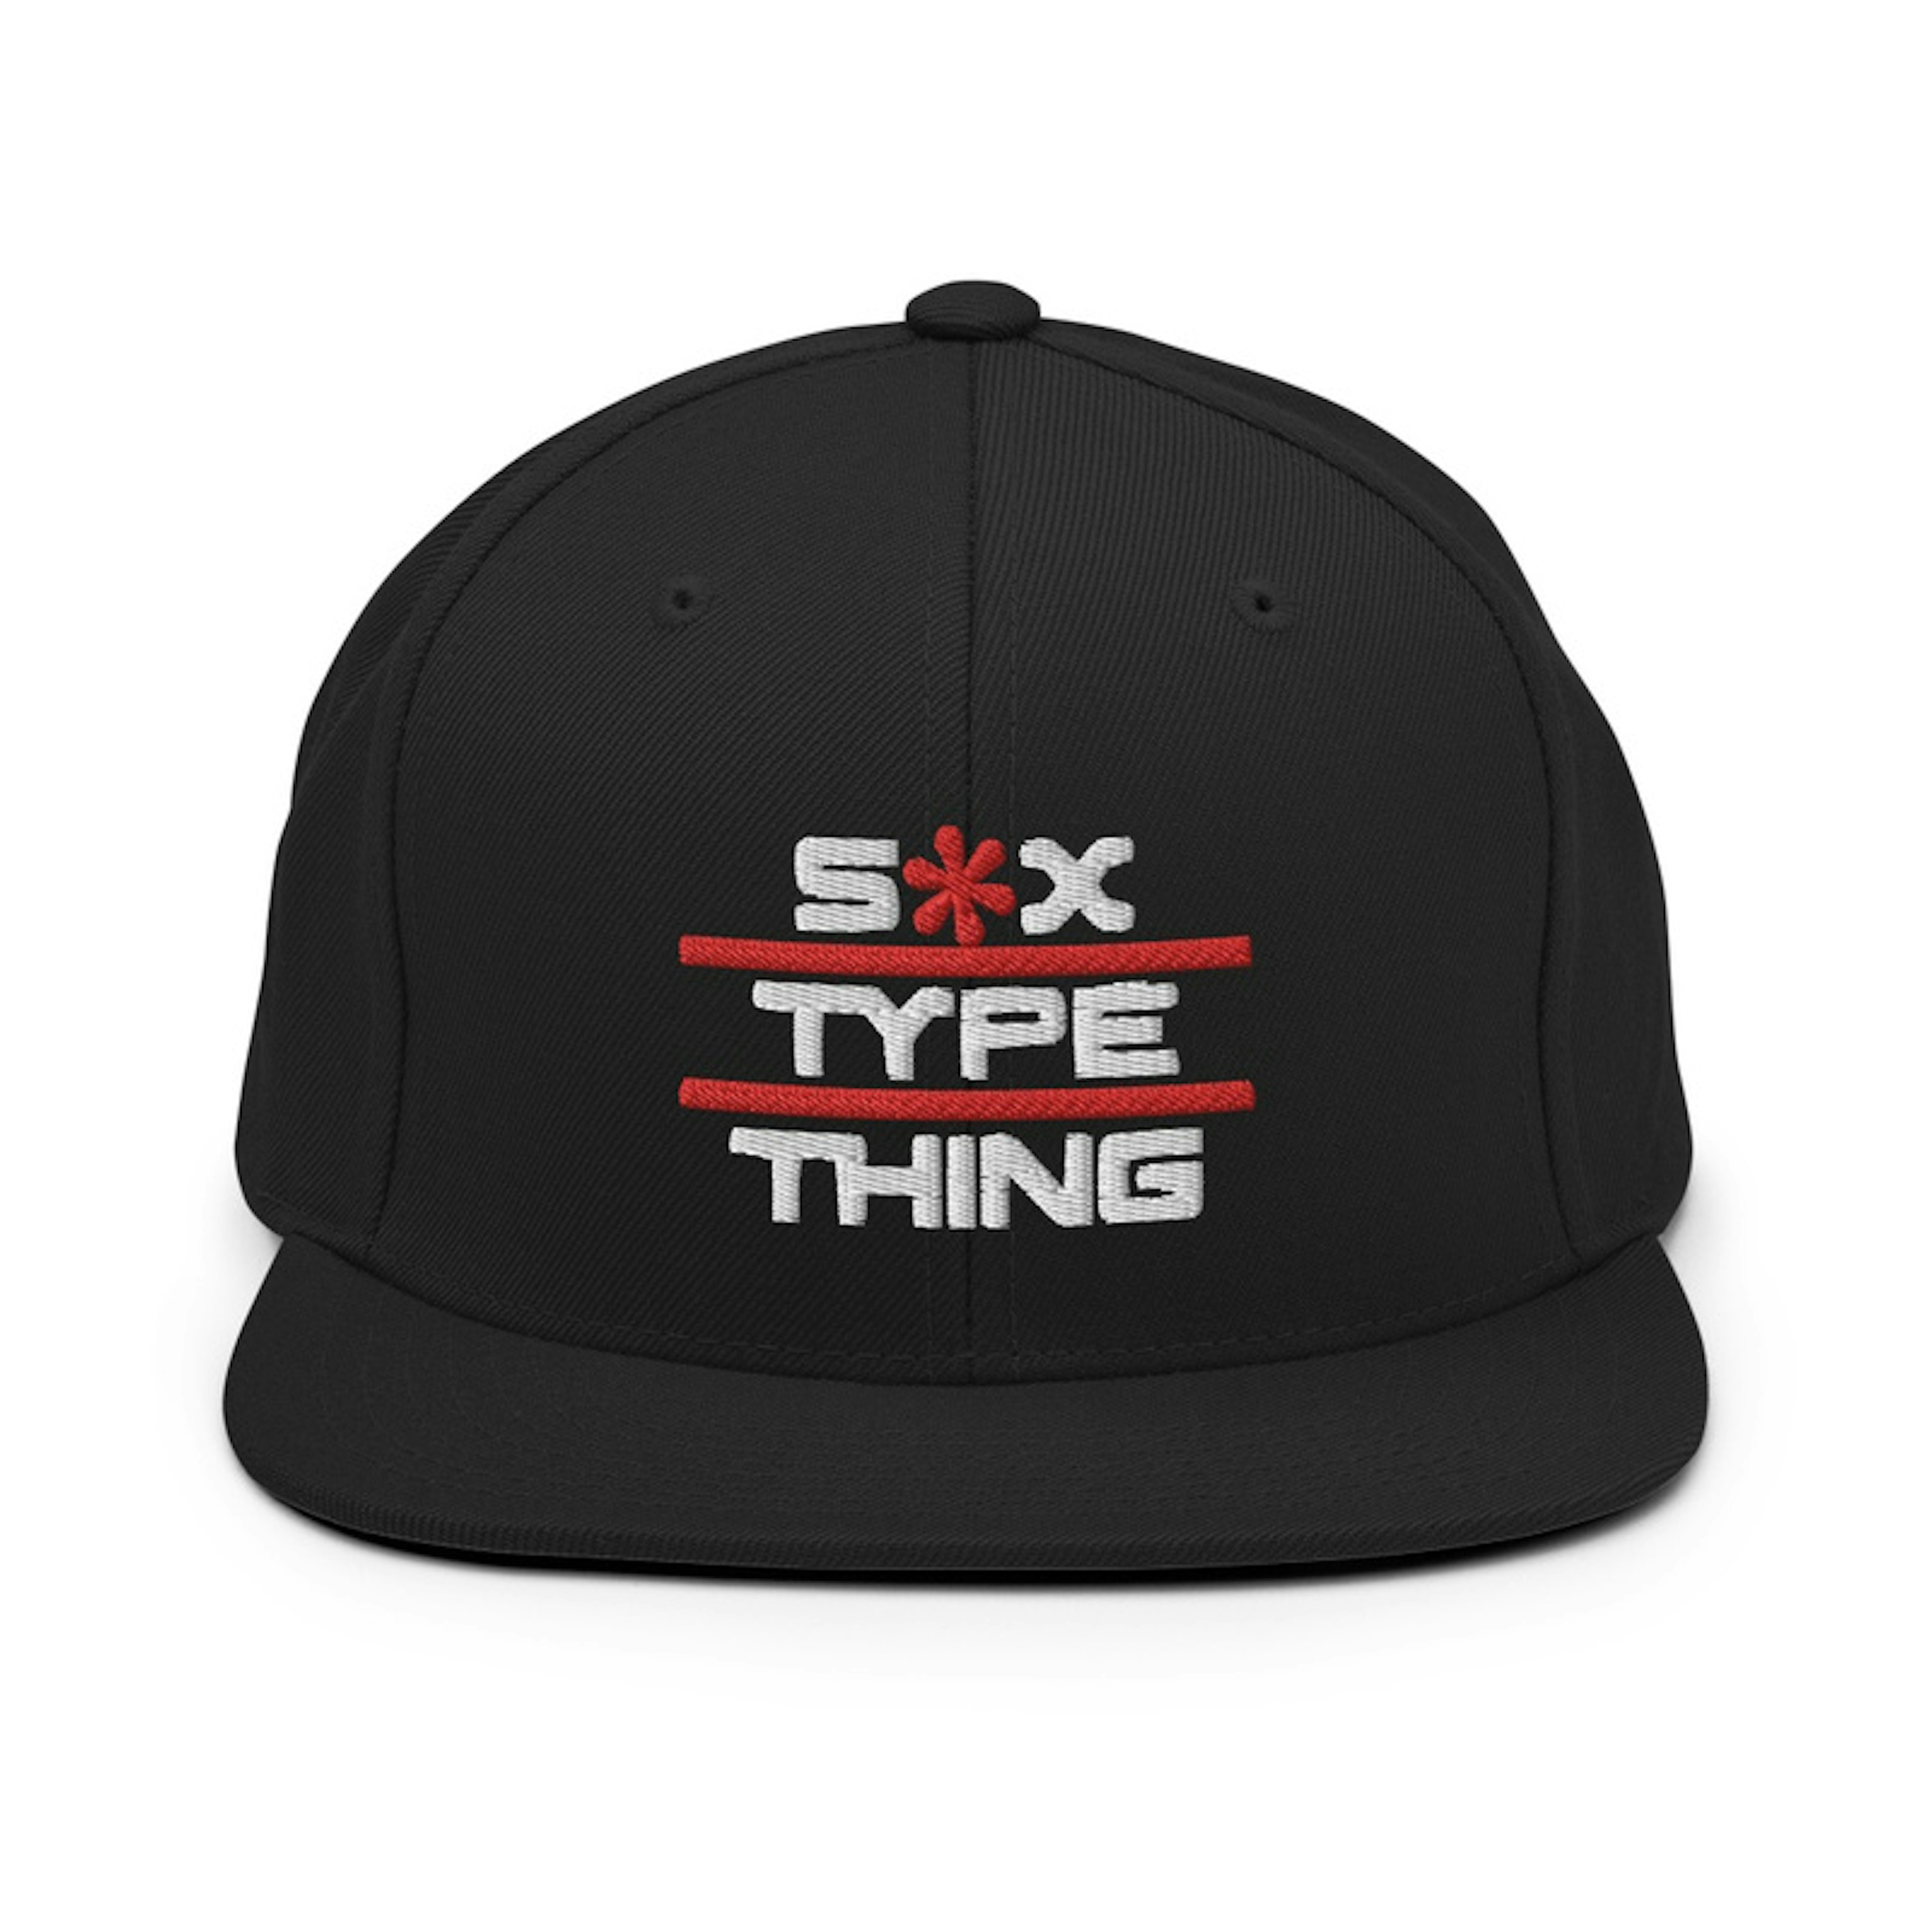 SOX TYPE THING CAP